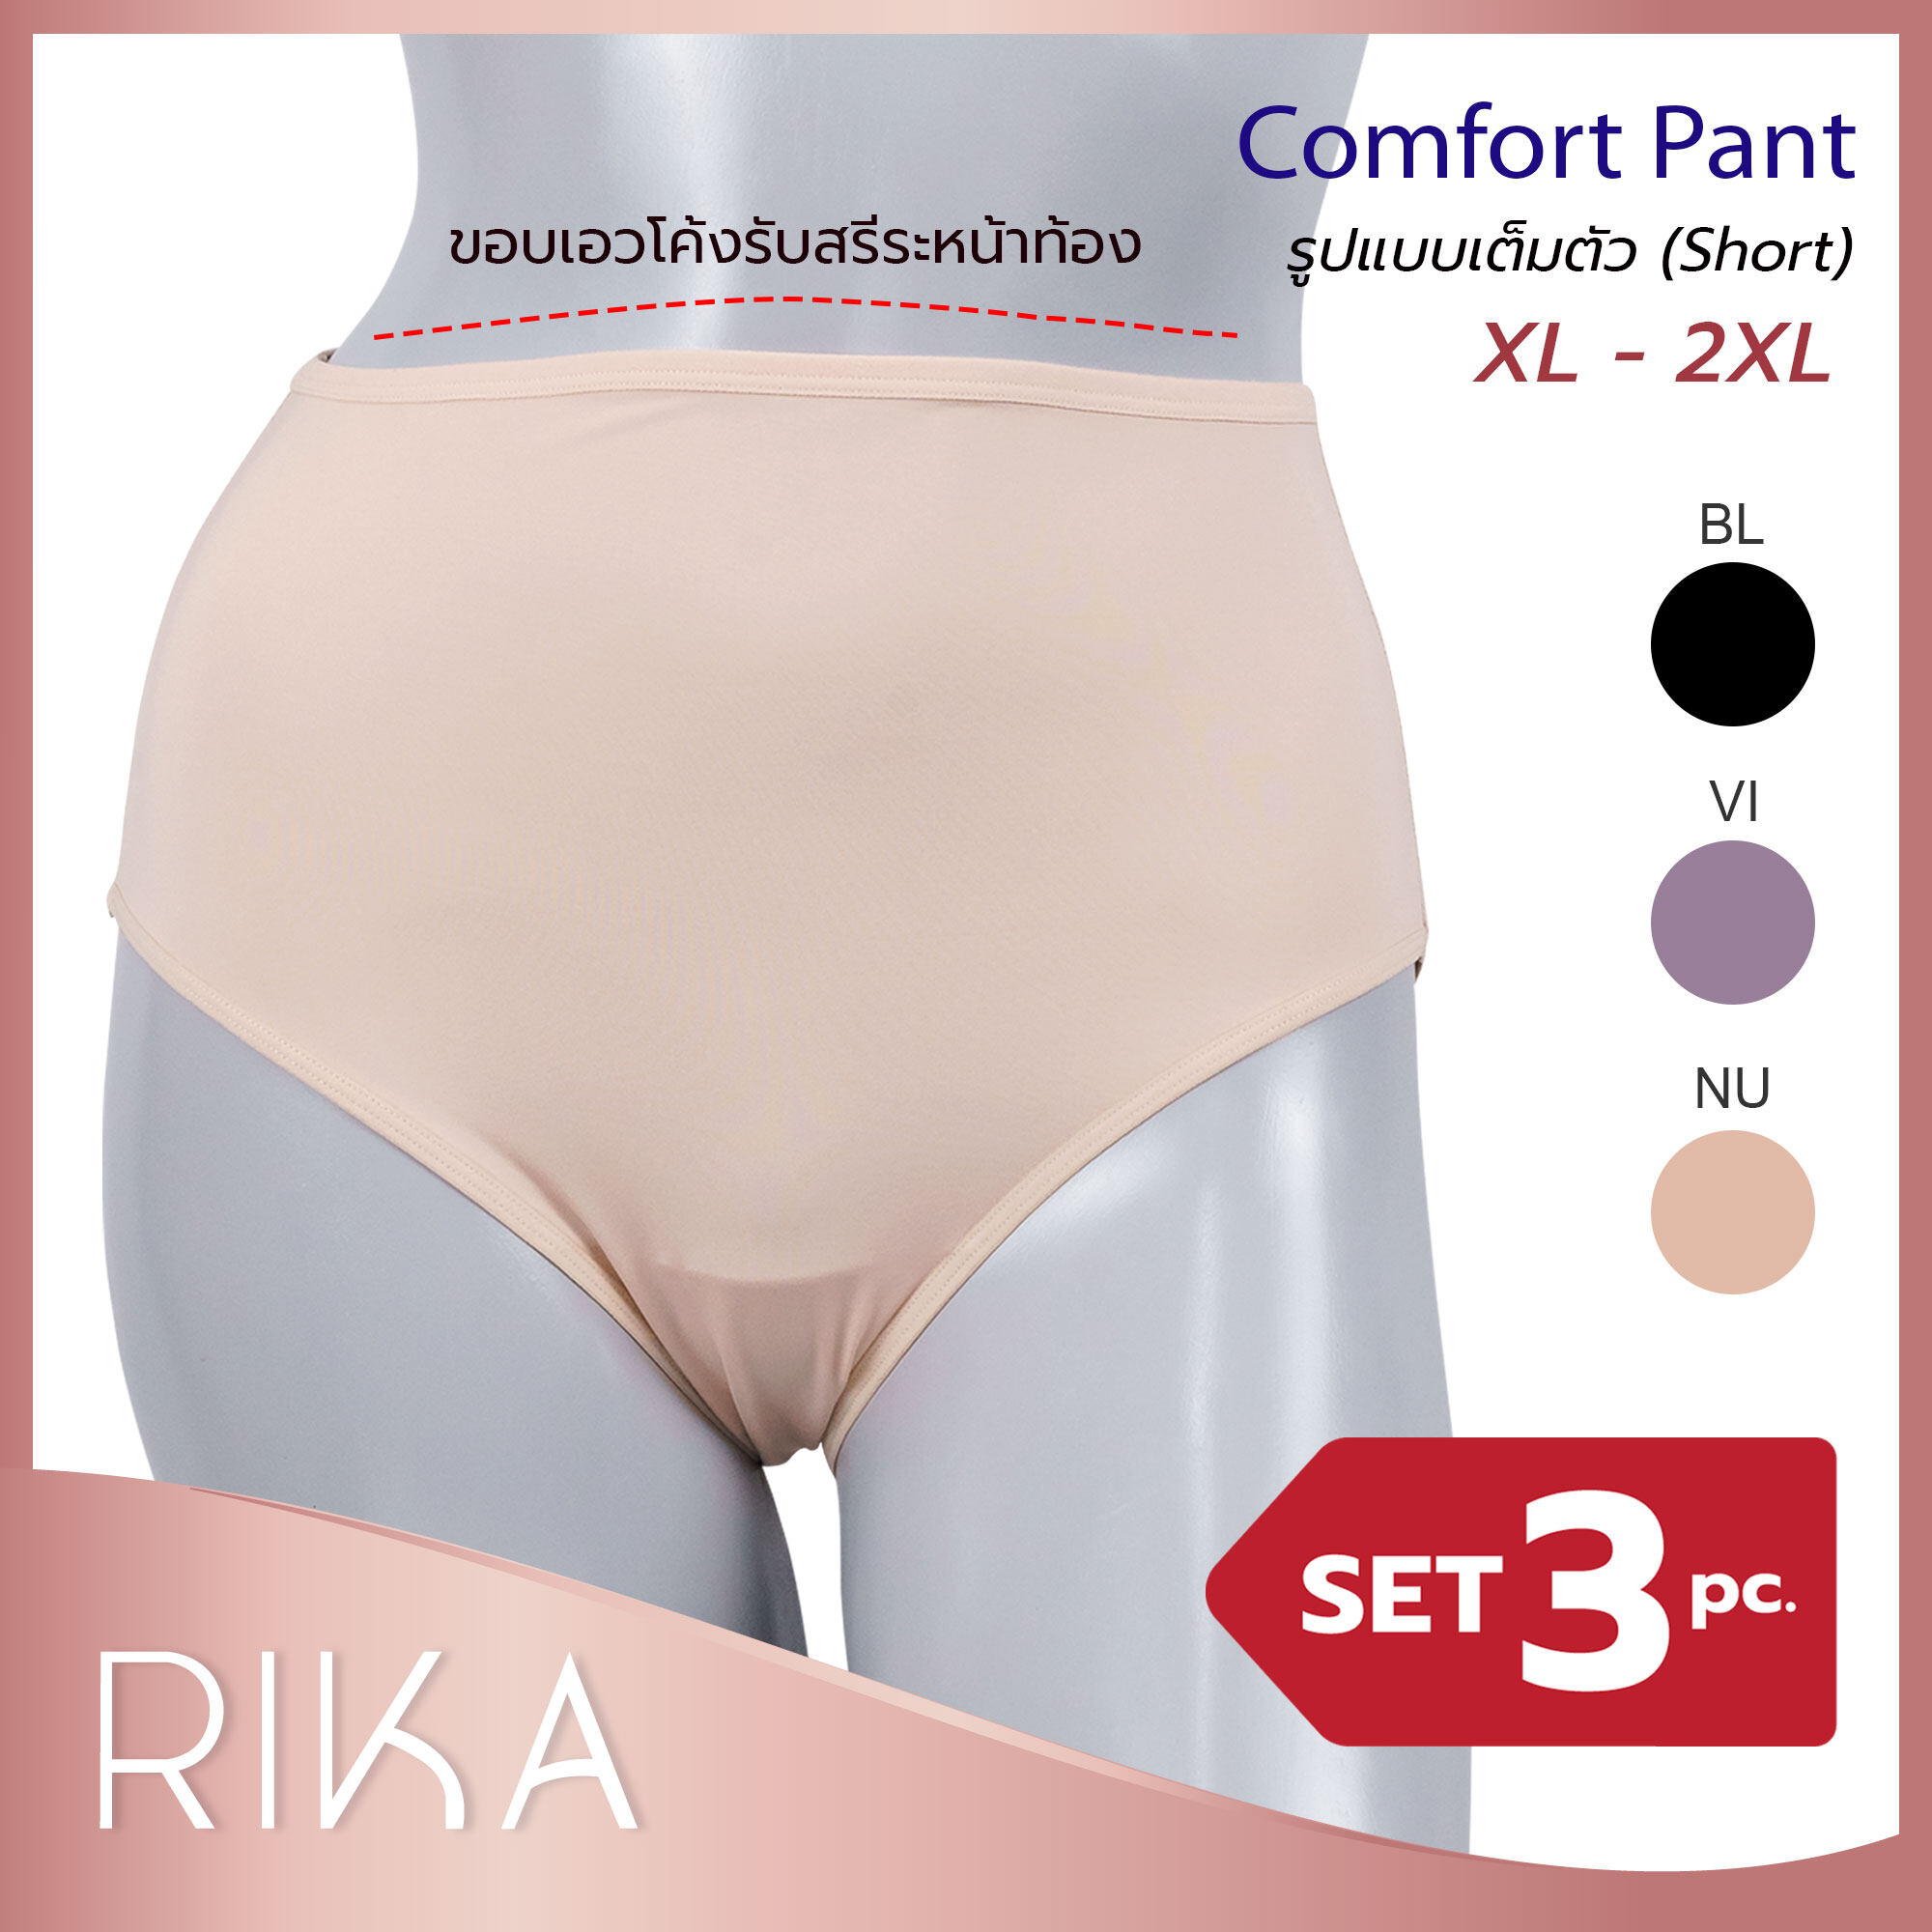 RIKA กางเกงในหญิง ไซส์ใหญ่ (set 3 ตัว) (XL - 5XL ) กางเกงในสาวอวบ ไซส์ใหญ่ พลัสไซส์ เก็บพุง ขอบเอวโค้งรับหน้าท้อง เพิ่มความมั่นใจ FV2F06 FV2F07